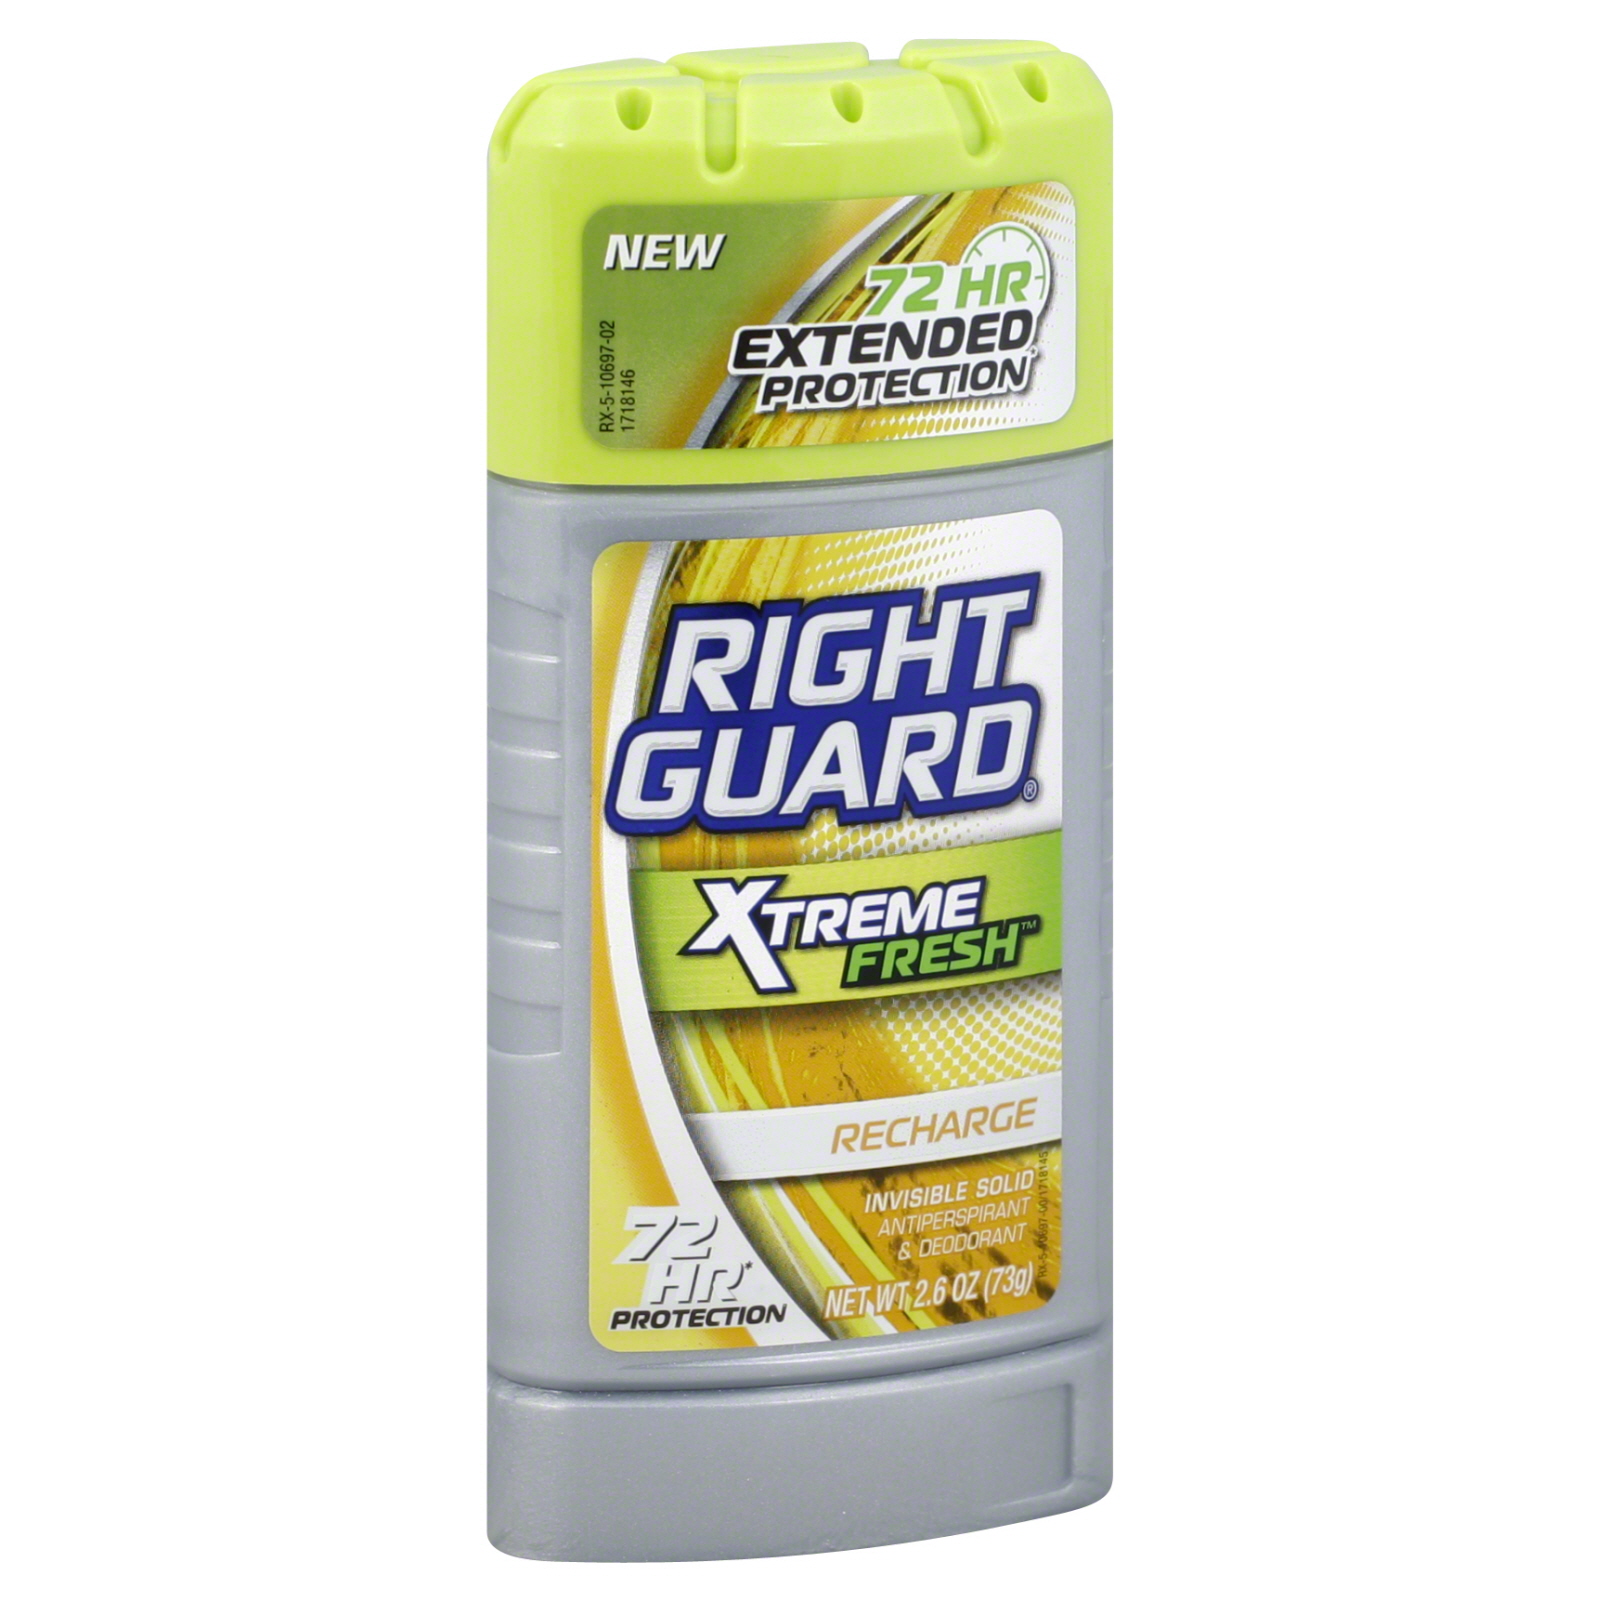 Right Guard Xtreme Fresh Antiperspirant & Deodorant, Recharge, 2.6 oz